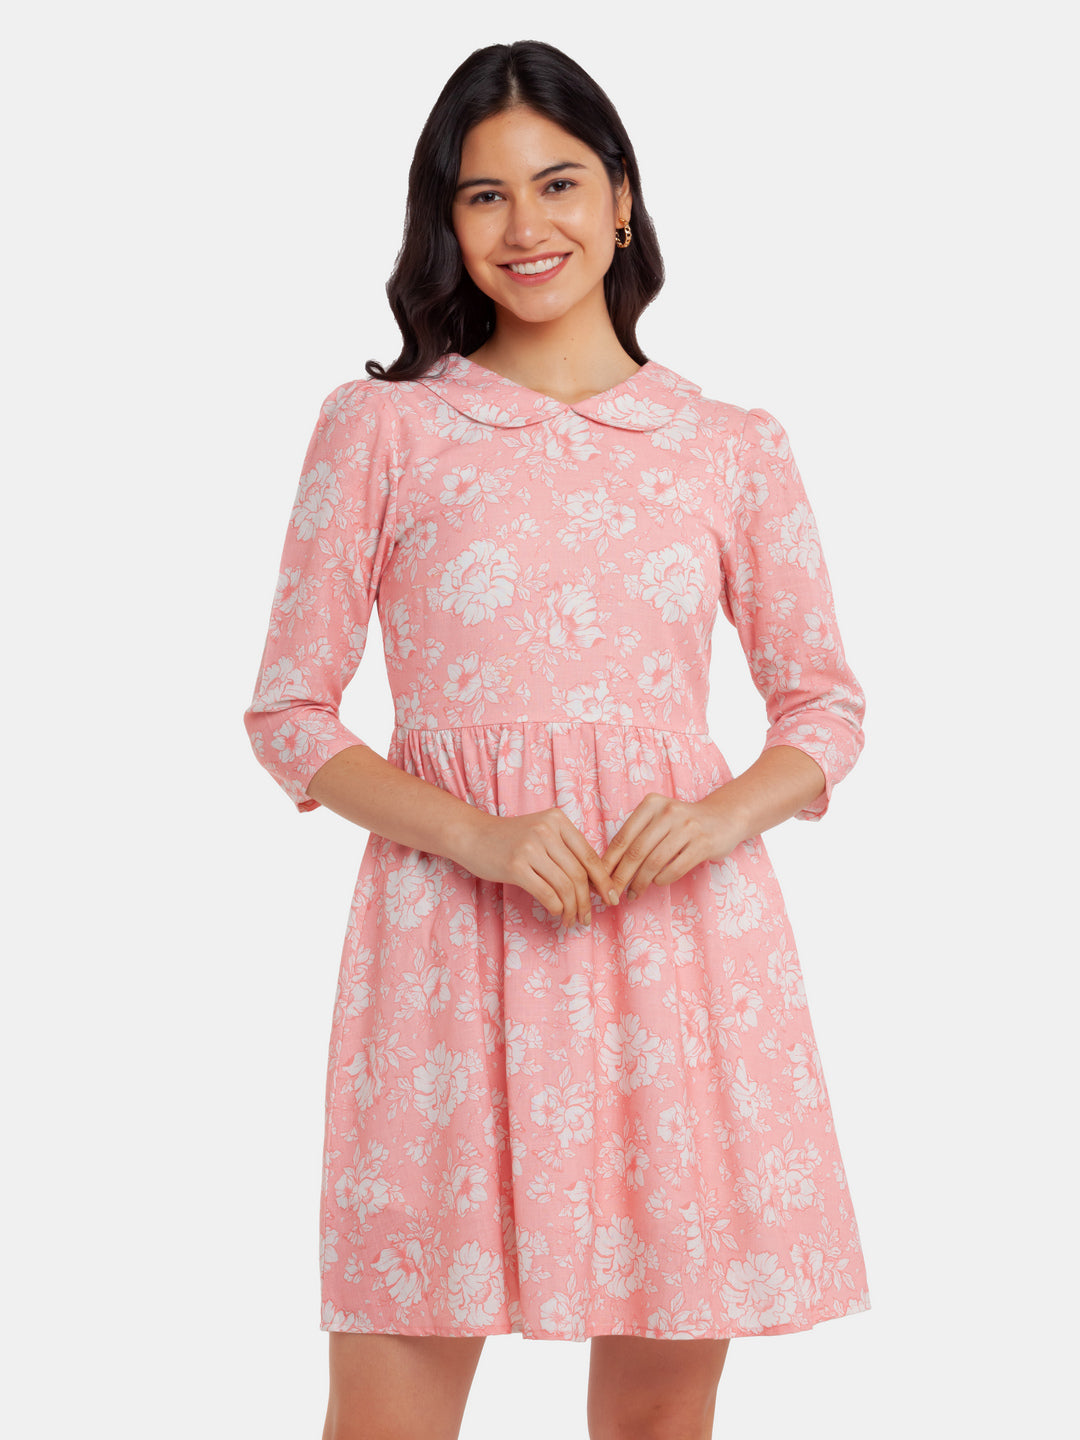 Pink Printed Short Dress For Women